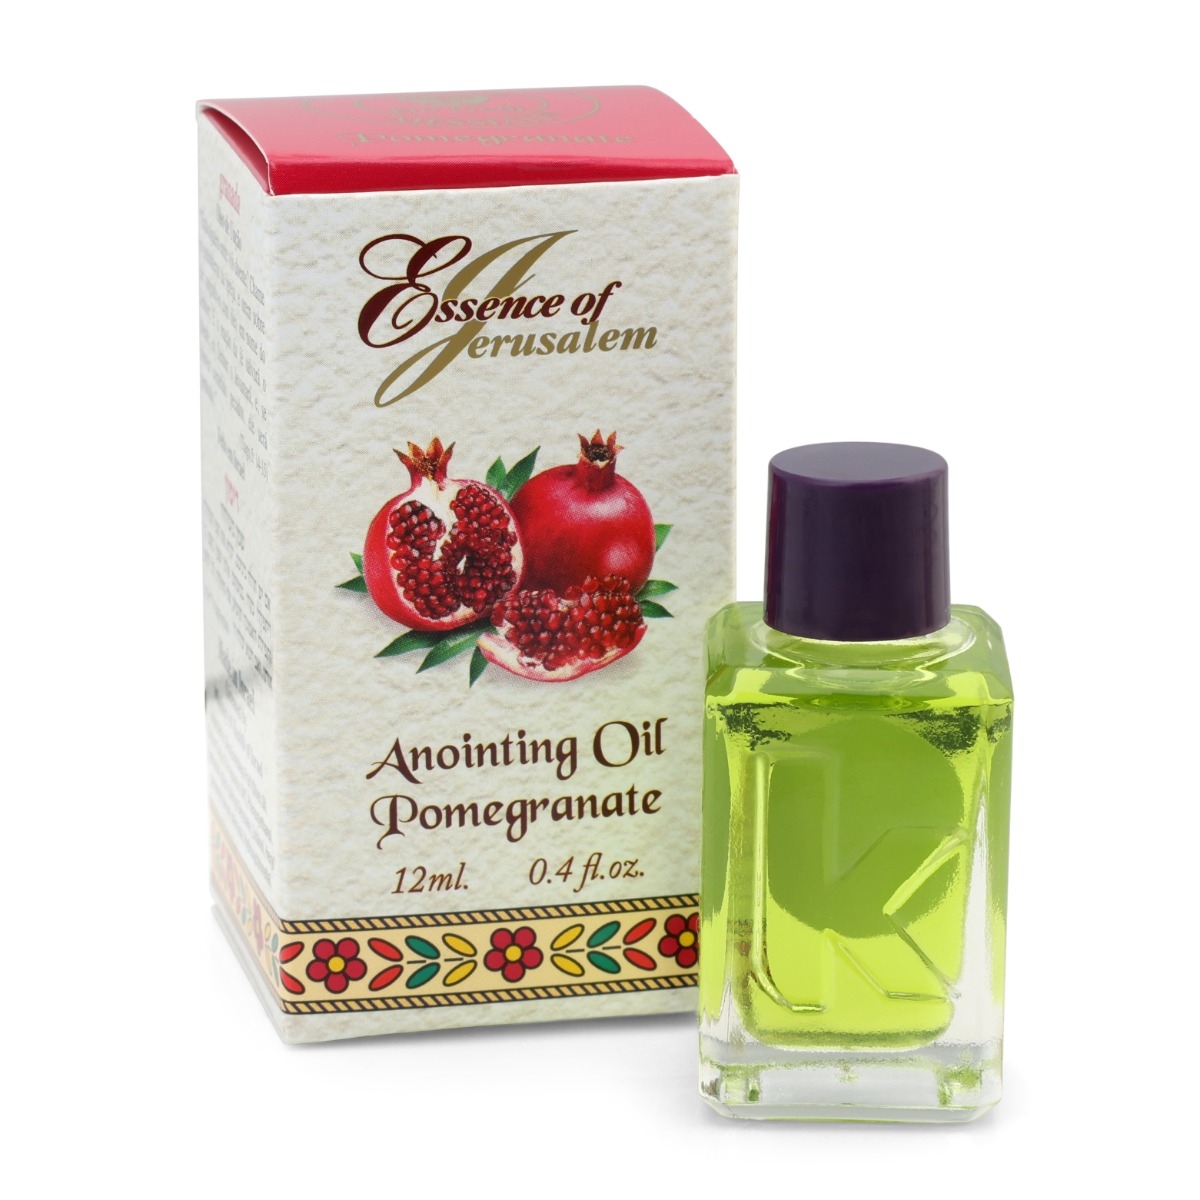 Ein Gedi Essence of Jerusalem 'Pomegranate' Anointing Oil (12 ml) - 1